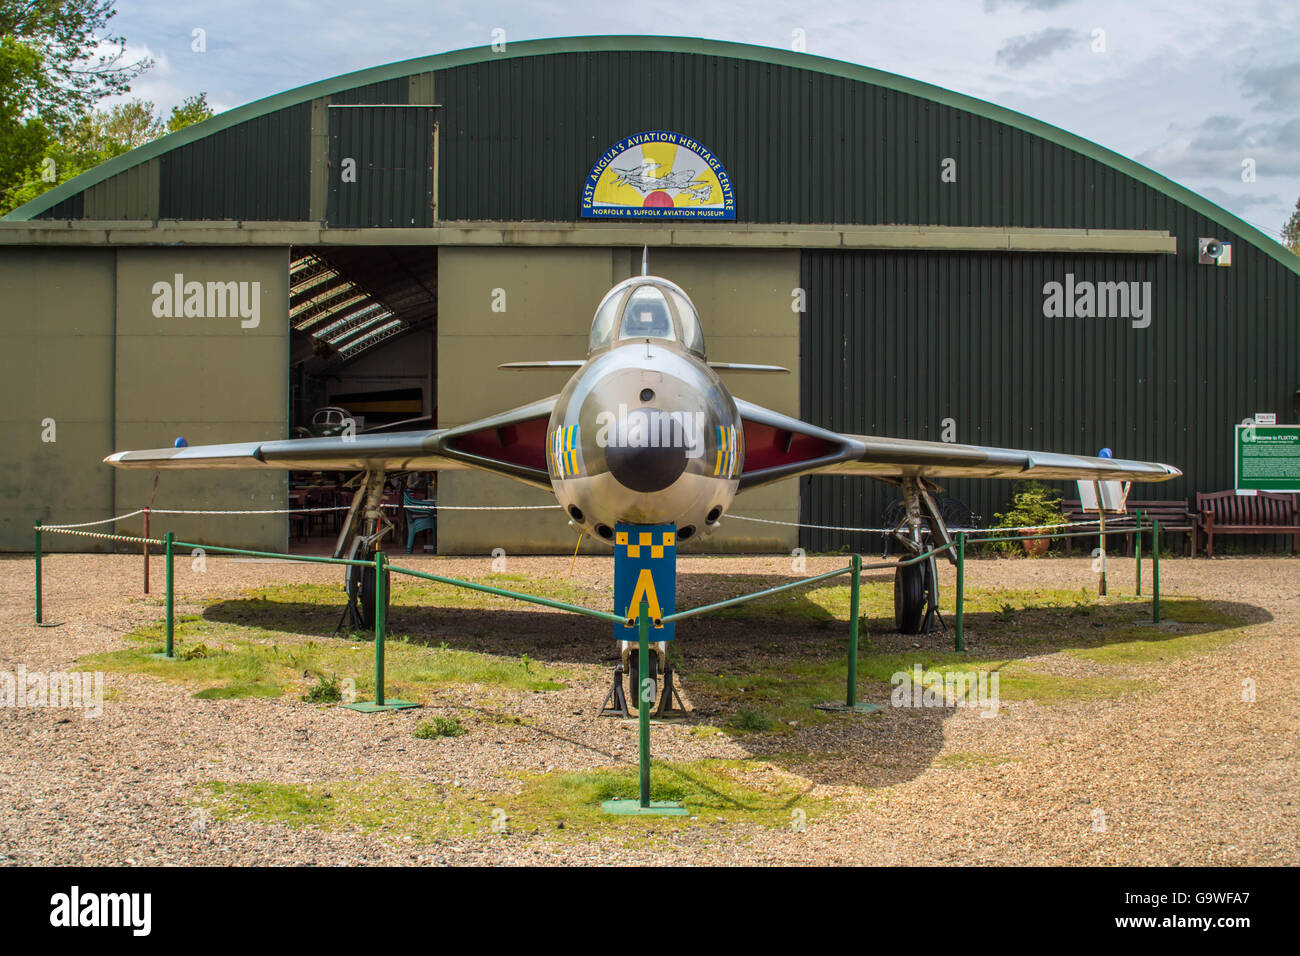 Hawker Hunter au musée de l'aviation avions flixton suffolk angleterre Banque D'Images